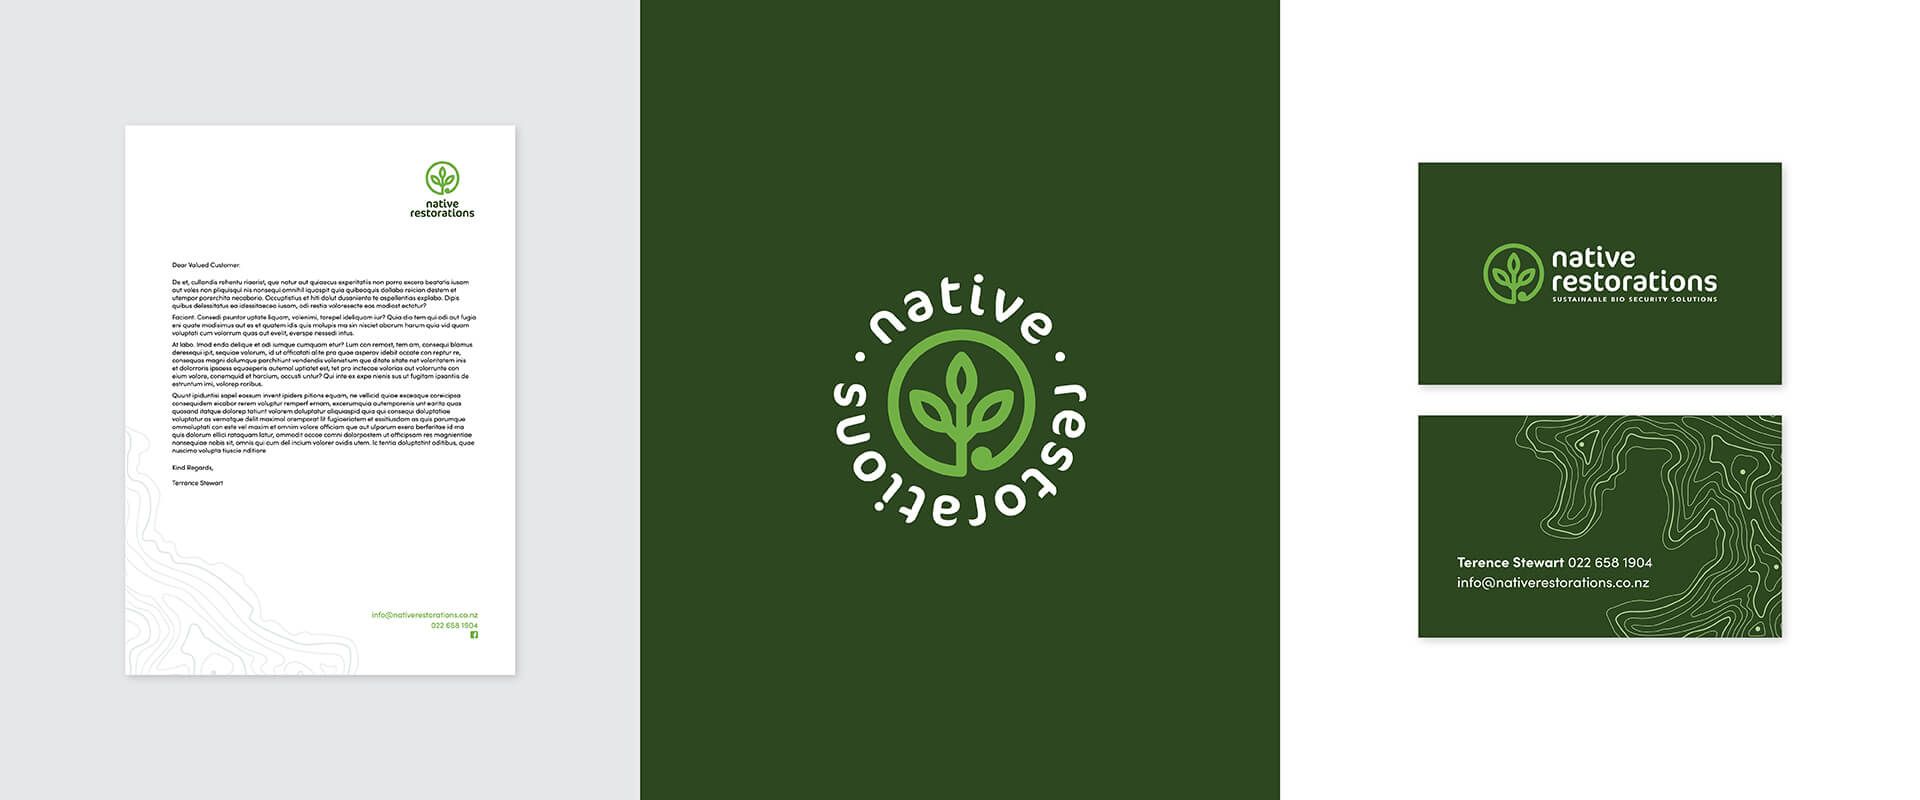 Native Restorations branding by Vanilla Hayes Ltd in Blenheim, New Zealand